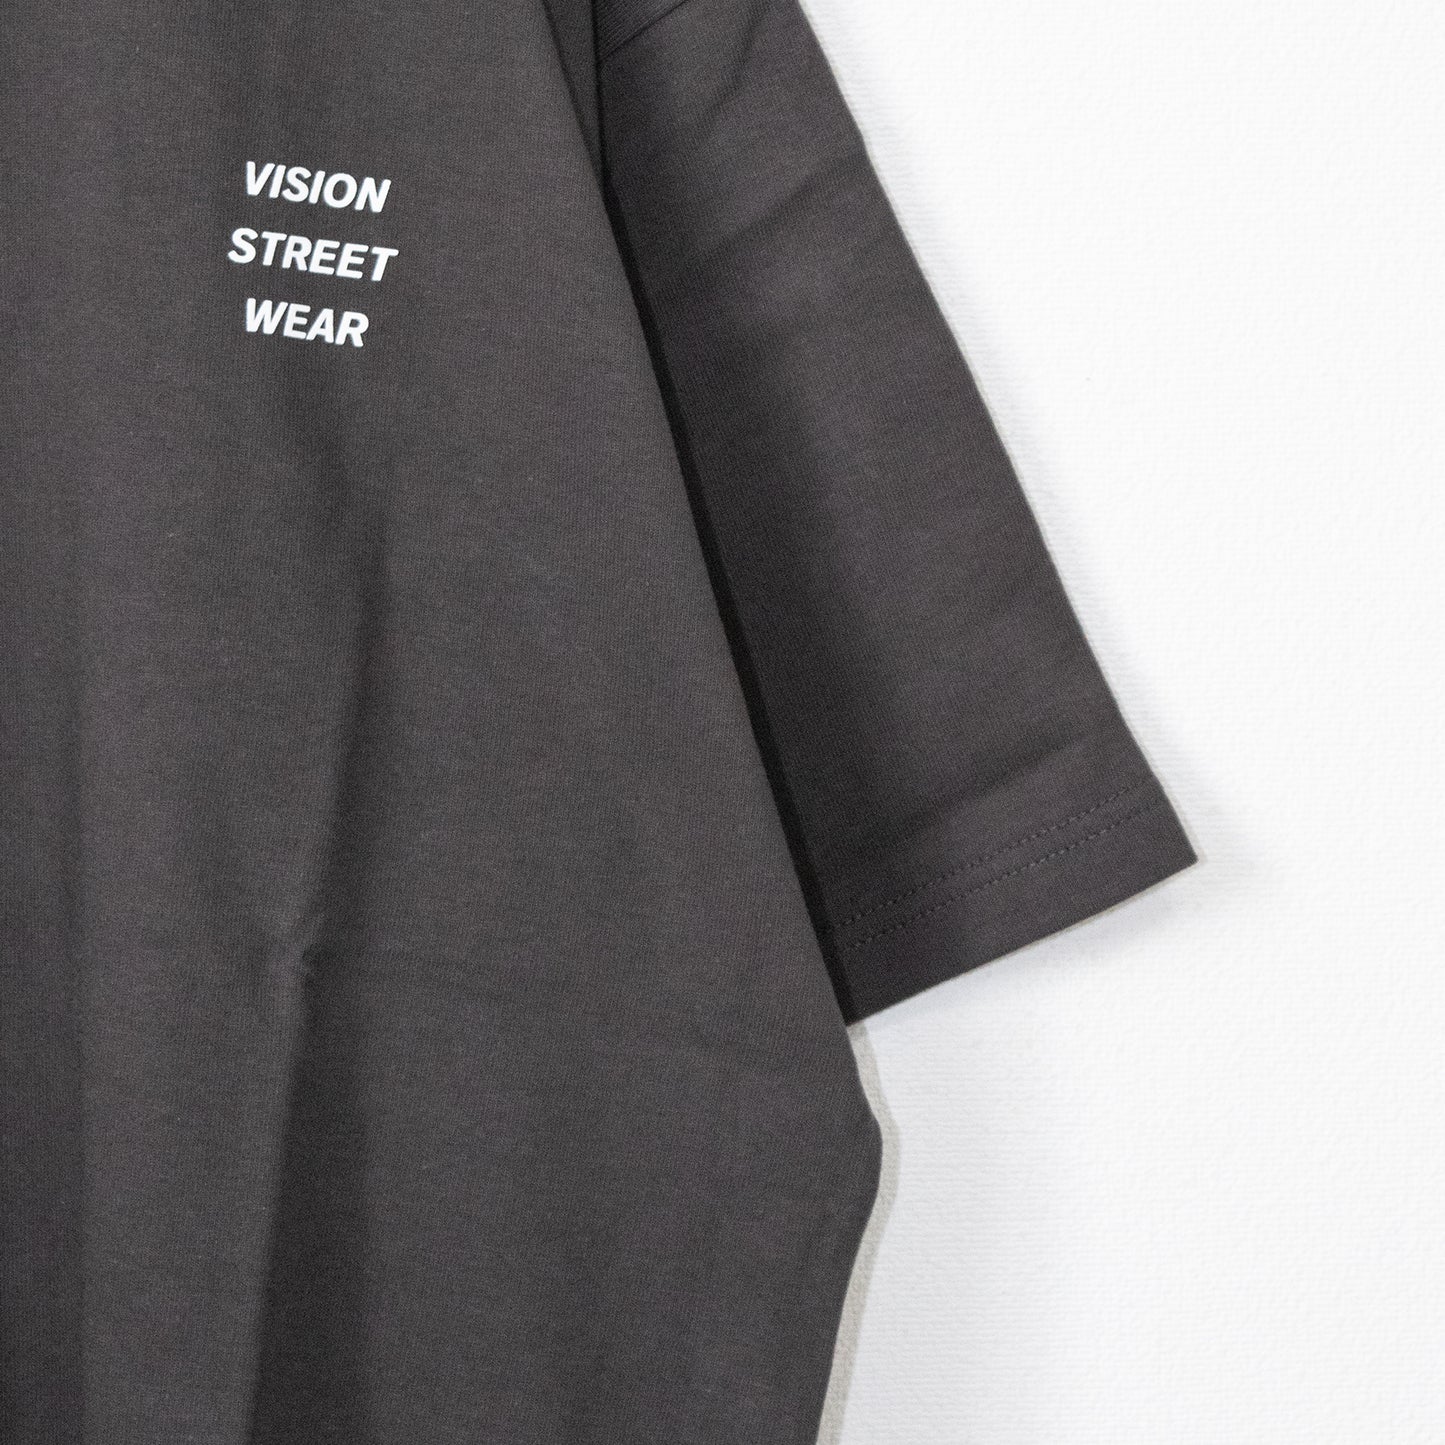 VISION STREET WEAR レトロショップイラストTシャツ